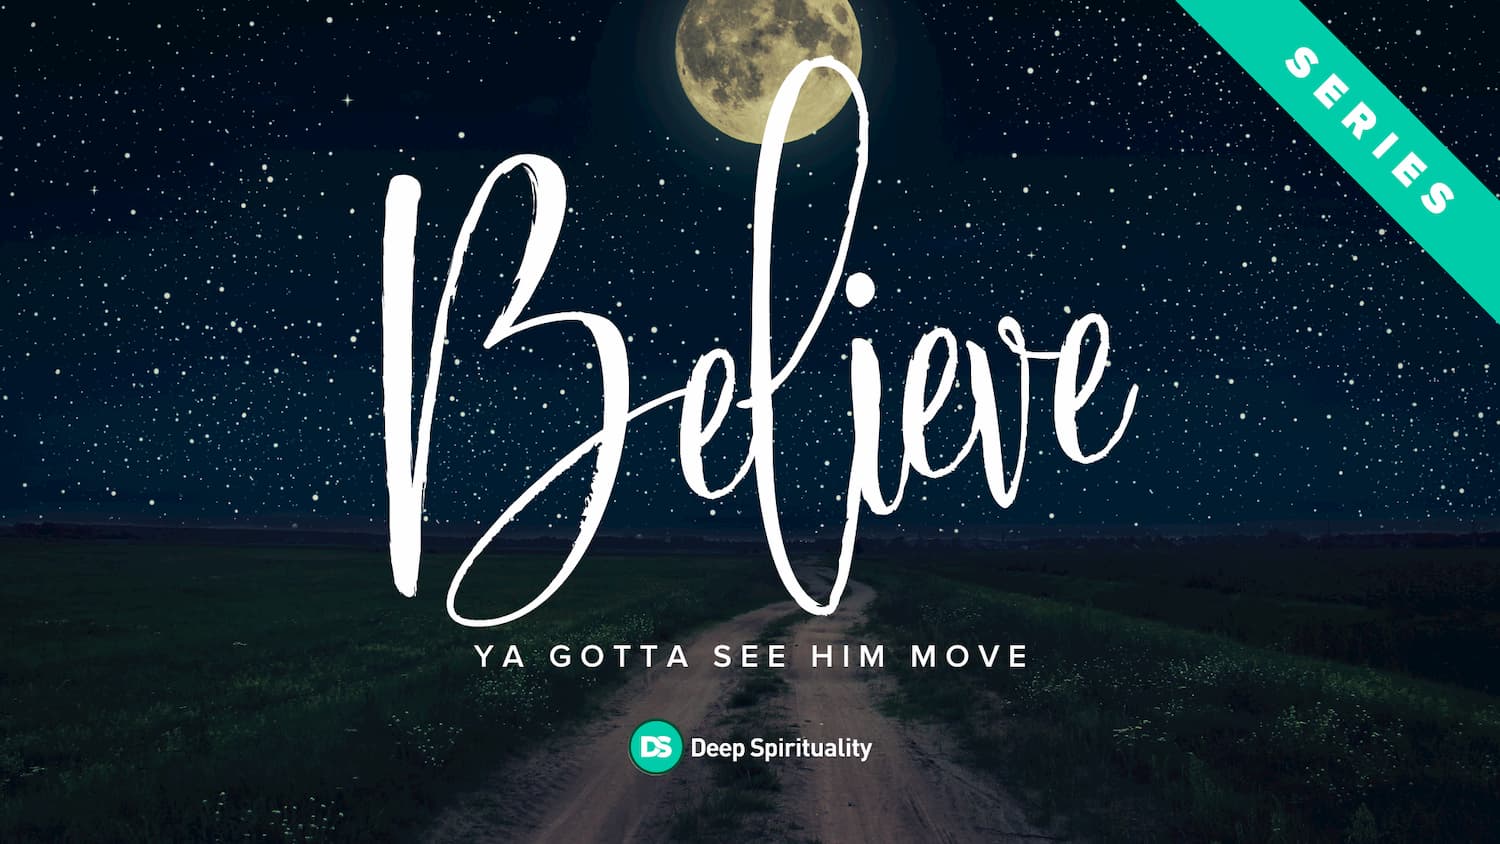 Believe, Part 2: Ya Gotta See Him Move 1